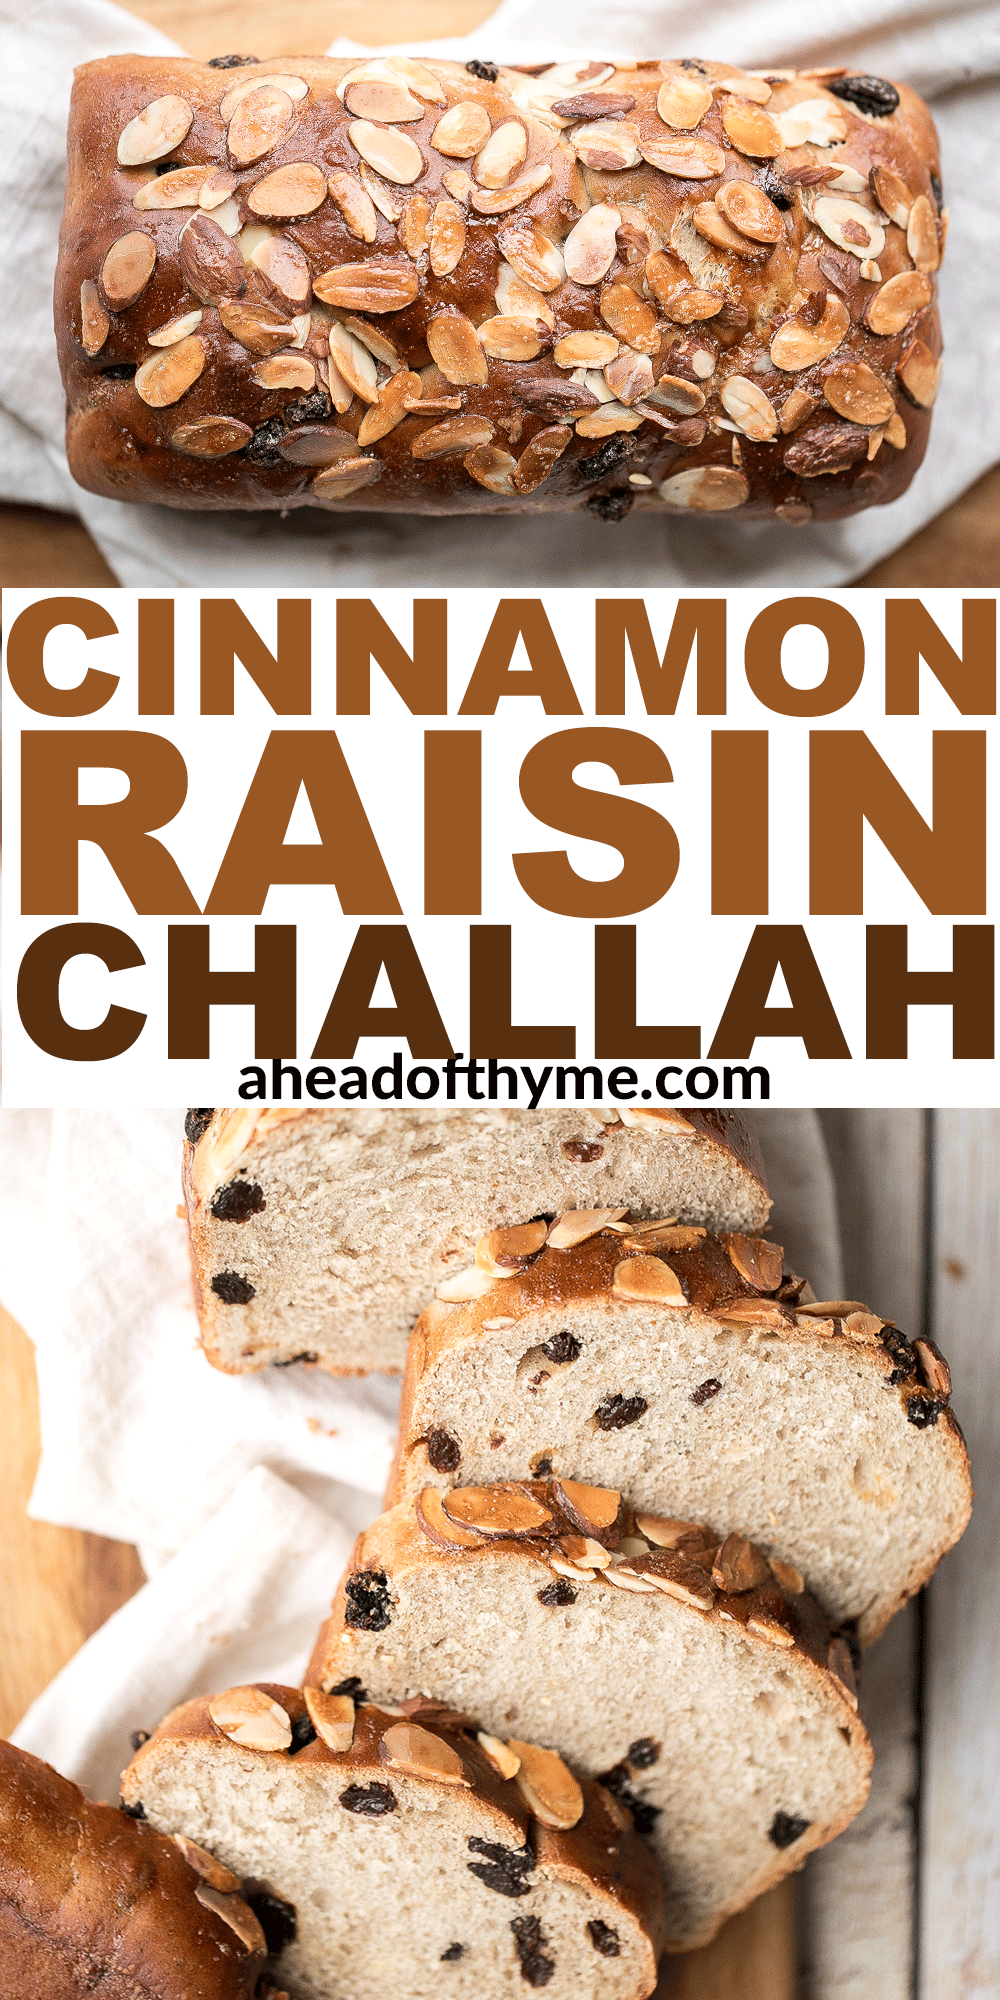 Cinnamon Raisin Challah Bread with Almonds